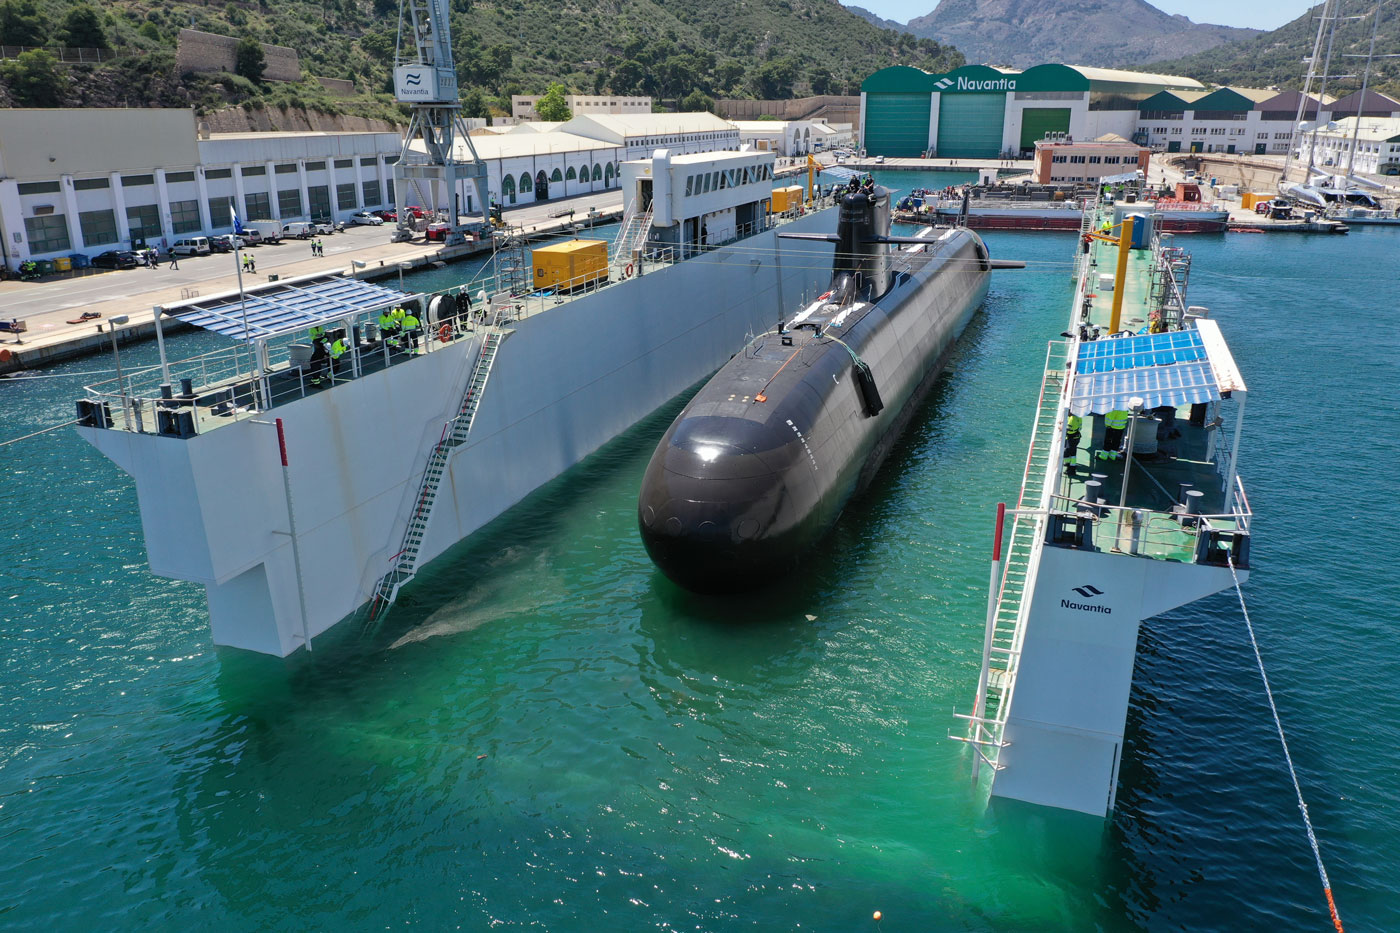 puesta a flote del submarino S-81